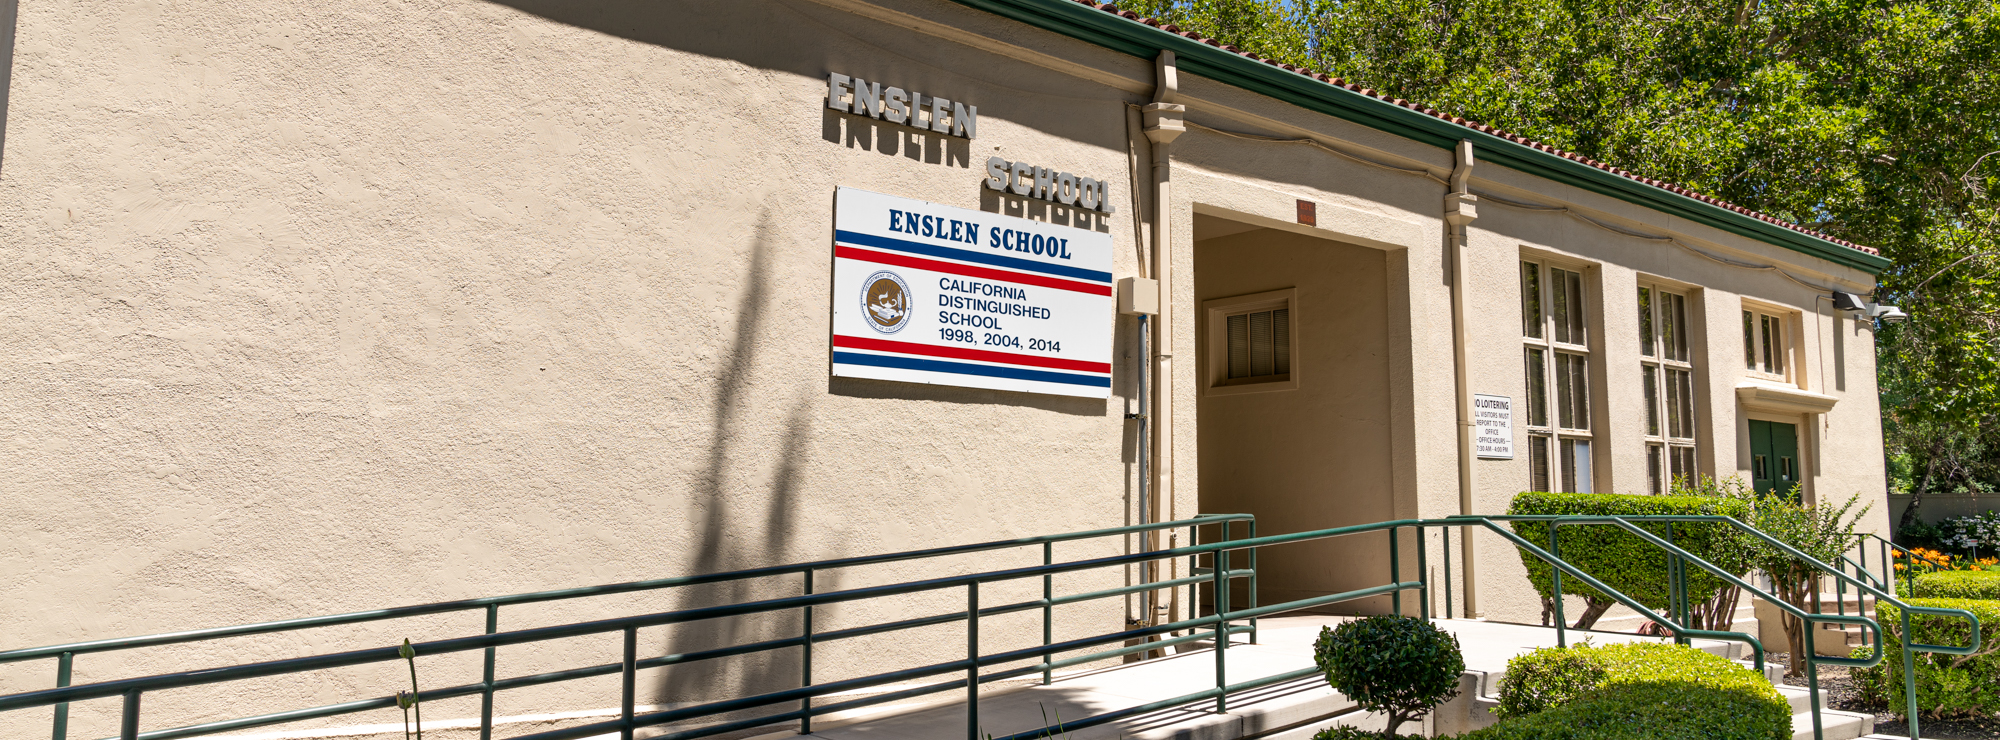 Front Entrance of Enslen Elementary School